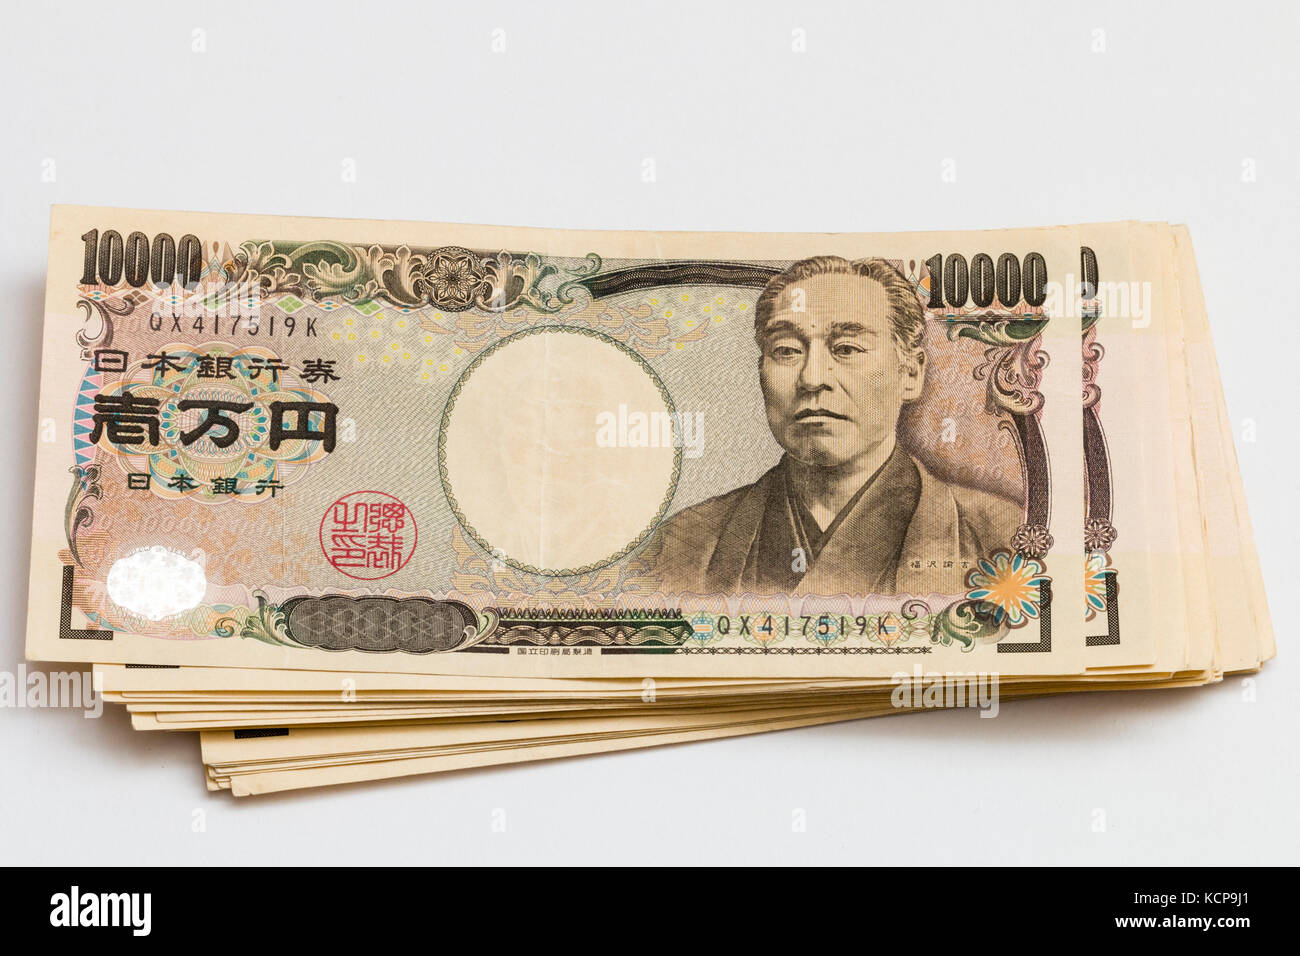 Japanese banknotes. Pile of 10,000 Yen notes on white background. Stock Photo